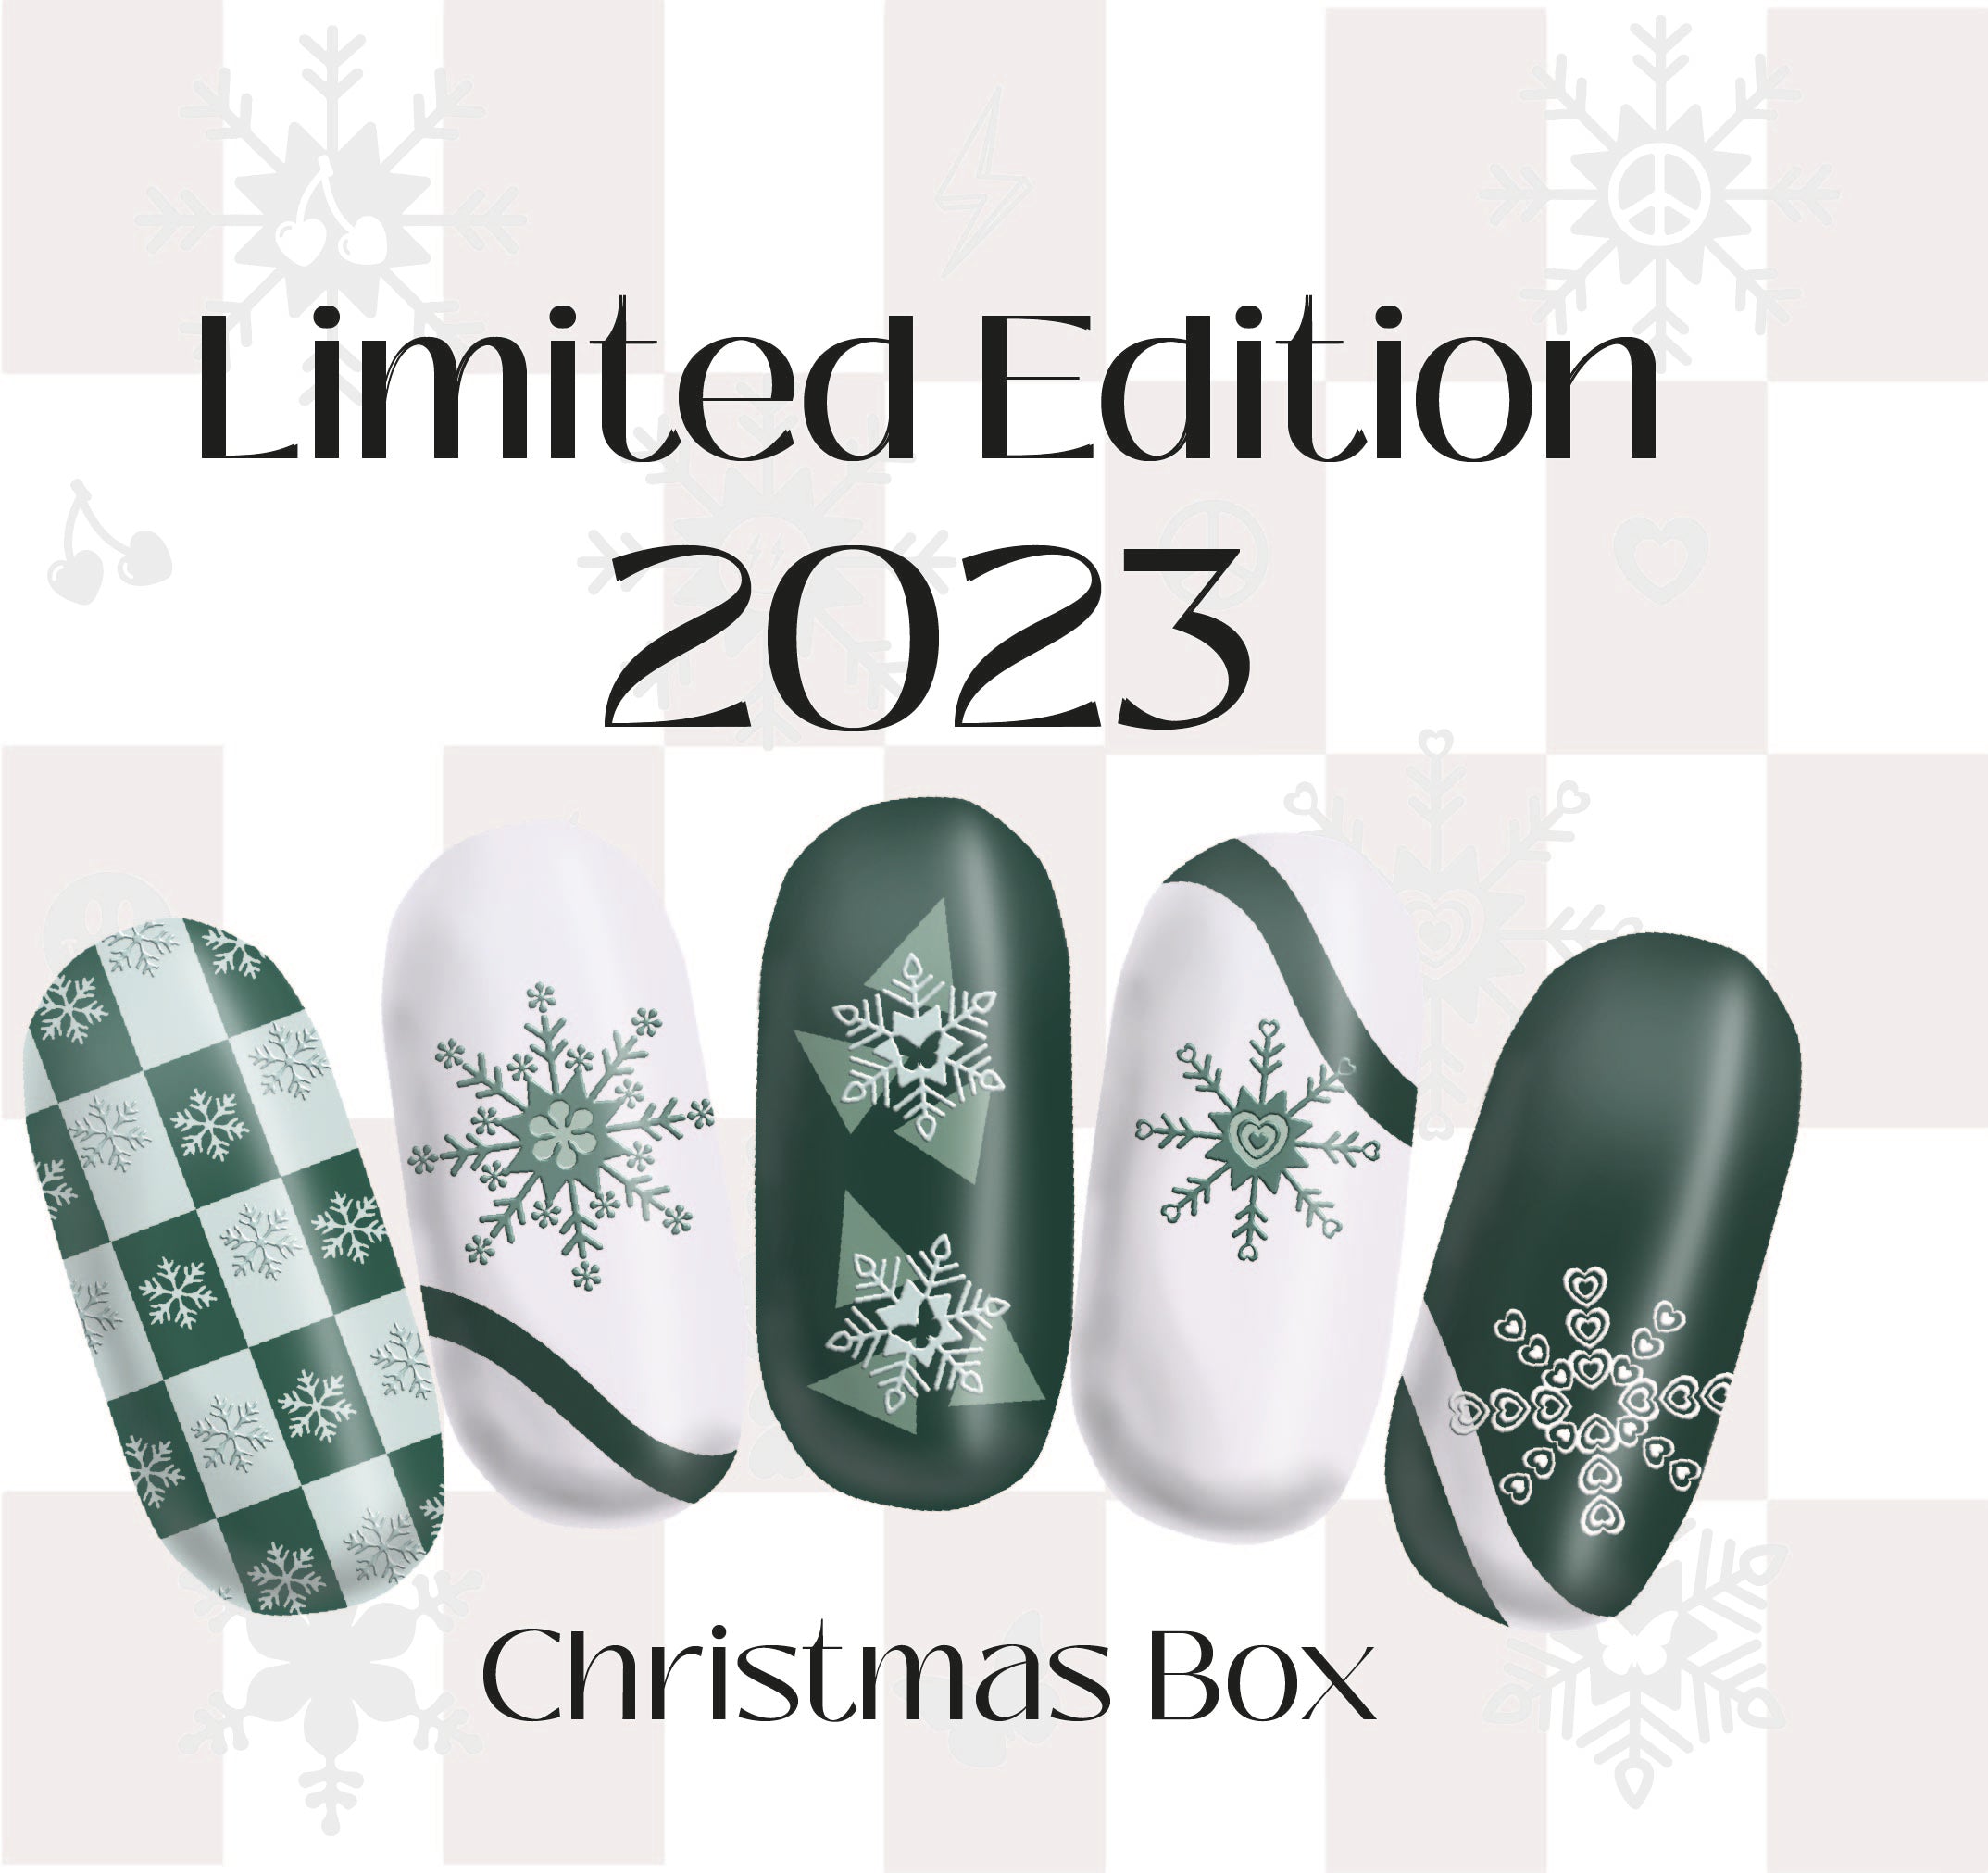 Limited Edition Christmas Box 2023